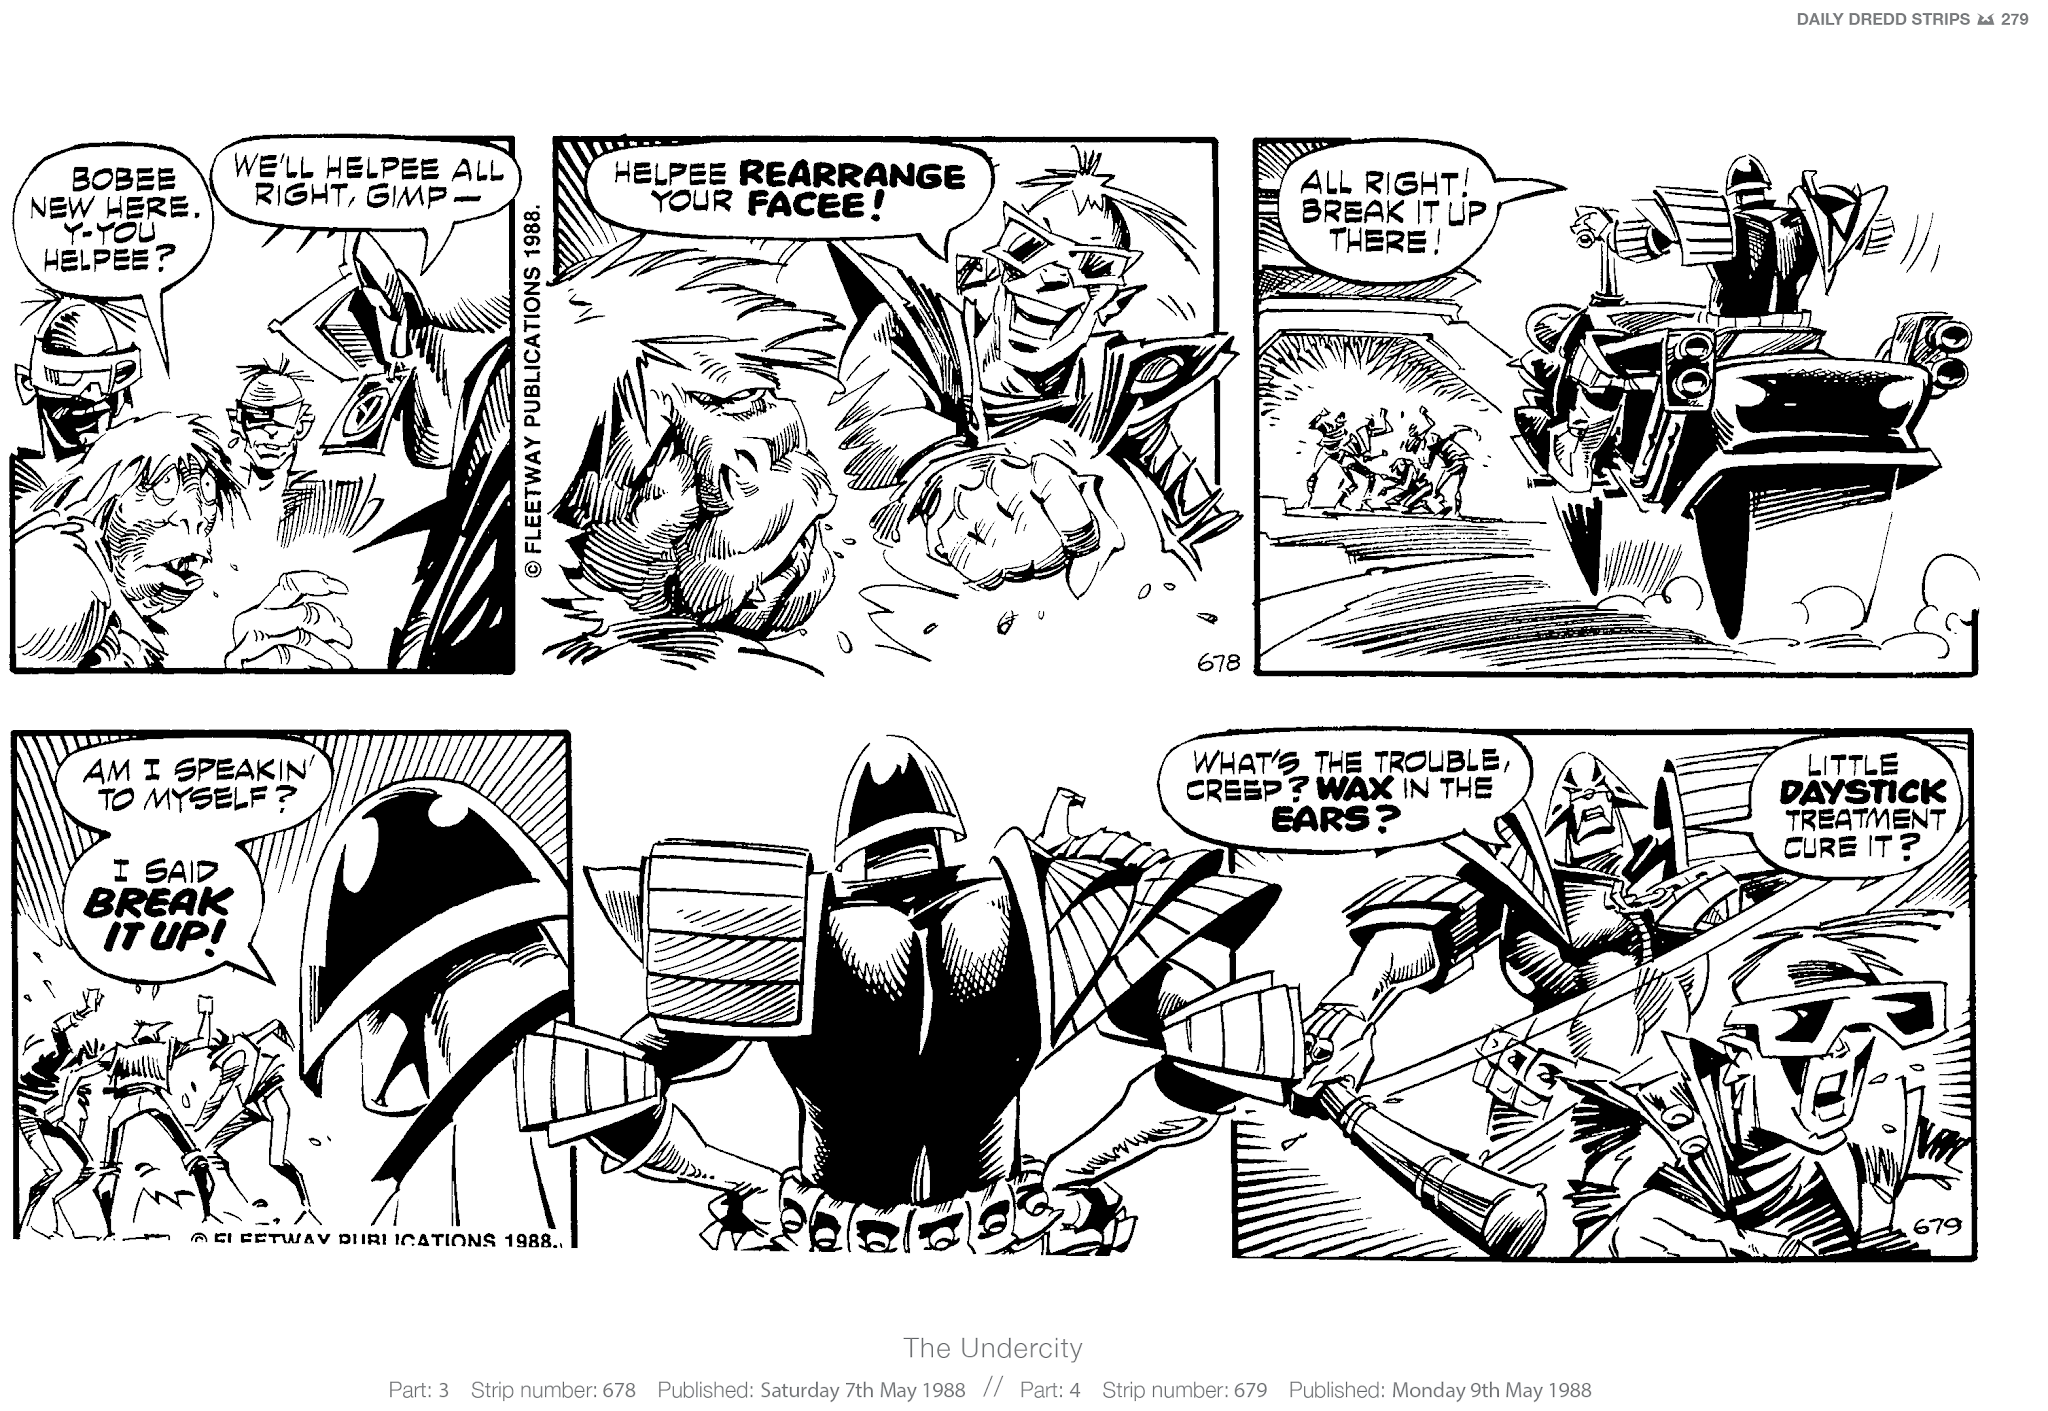 Read online Judge Dredd: The Daily Dredds comic -  Issue # TPB 2 - 282